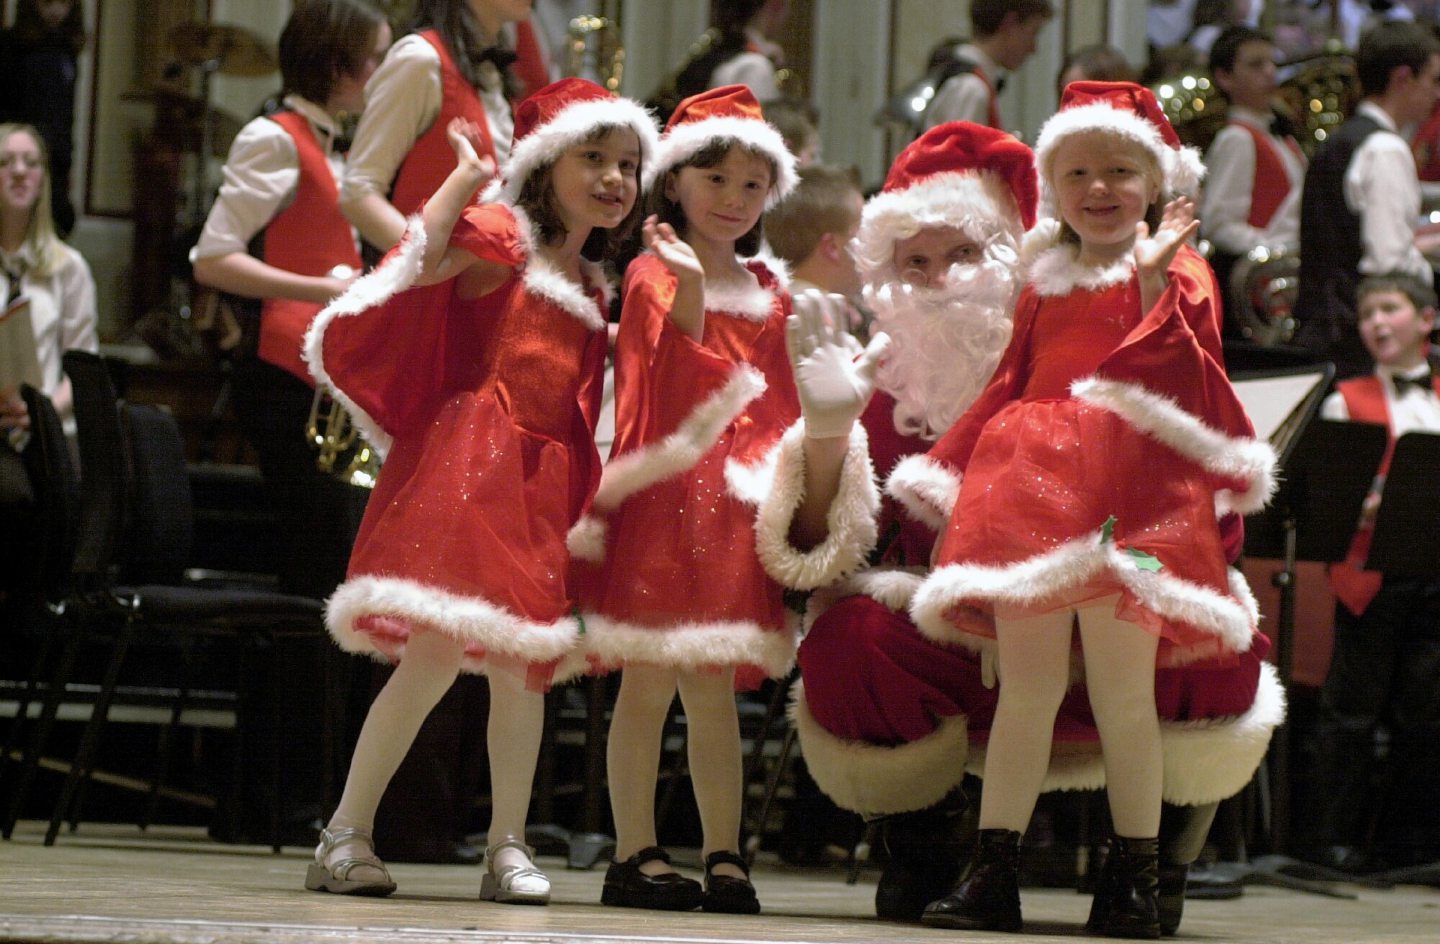 someone dressed as santa kneeling next to three girls in festive costumes